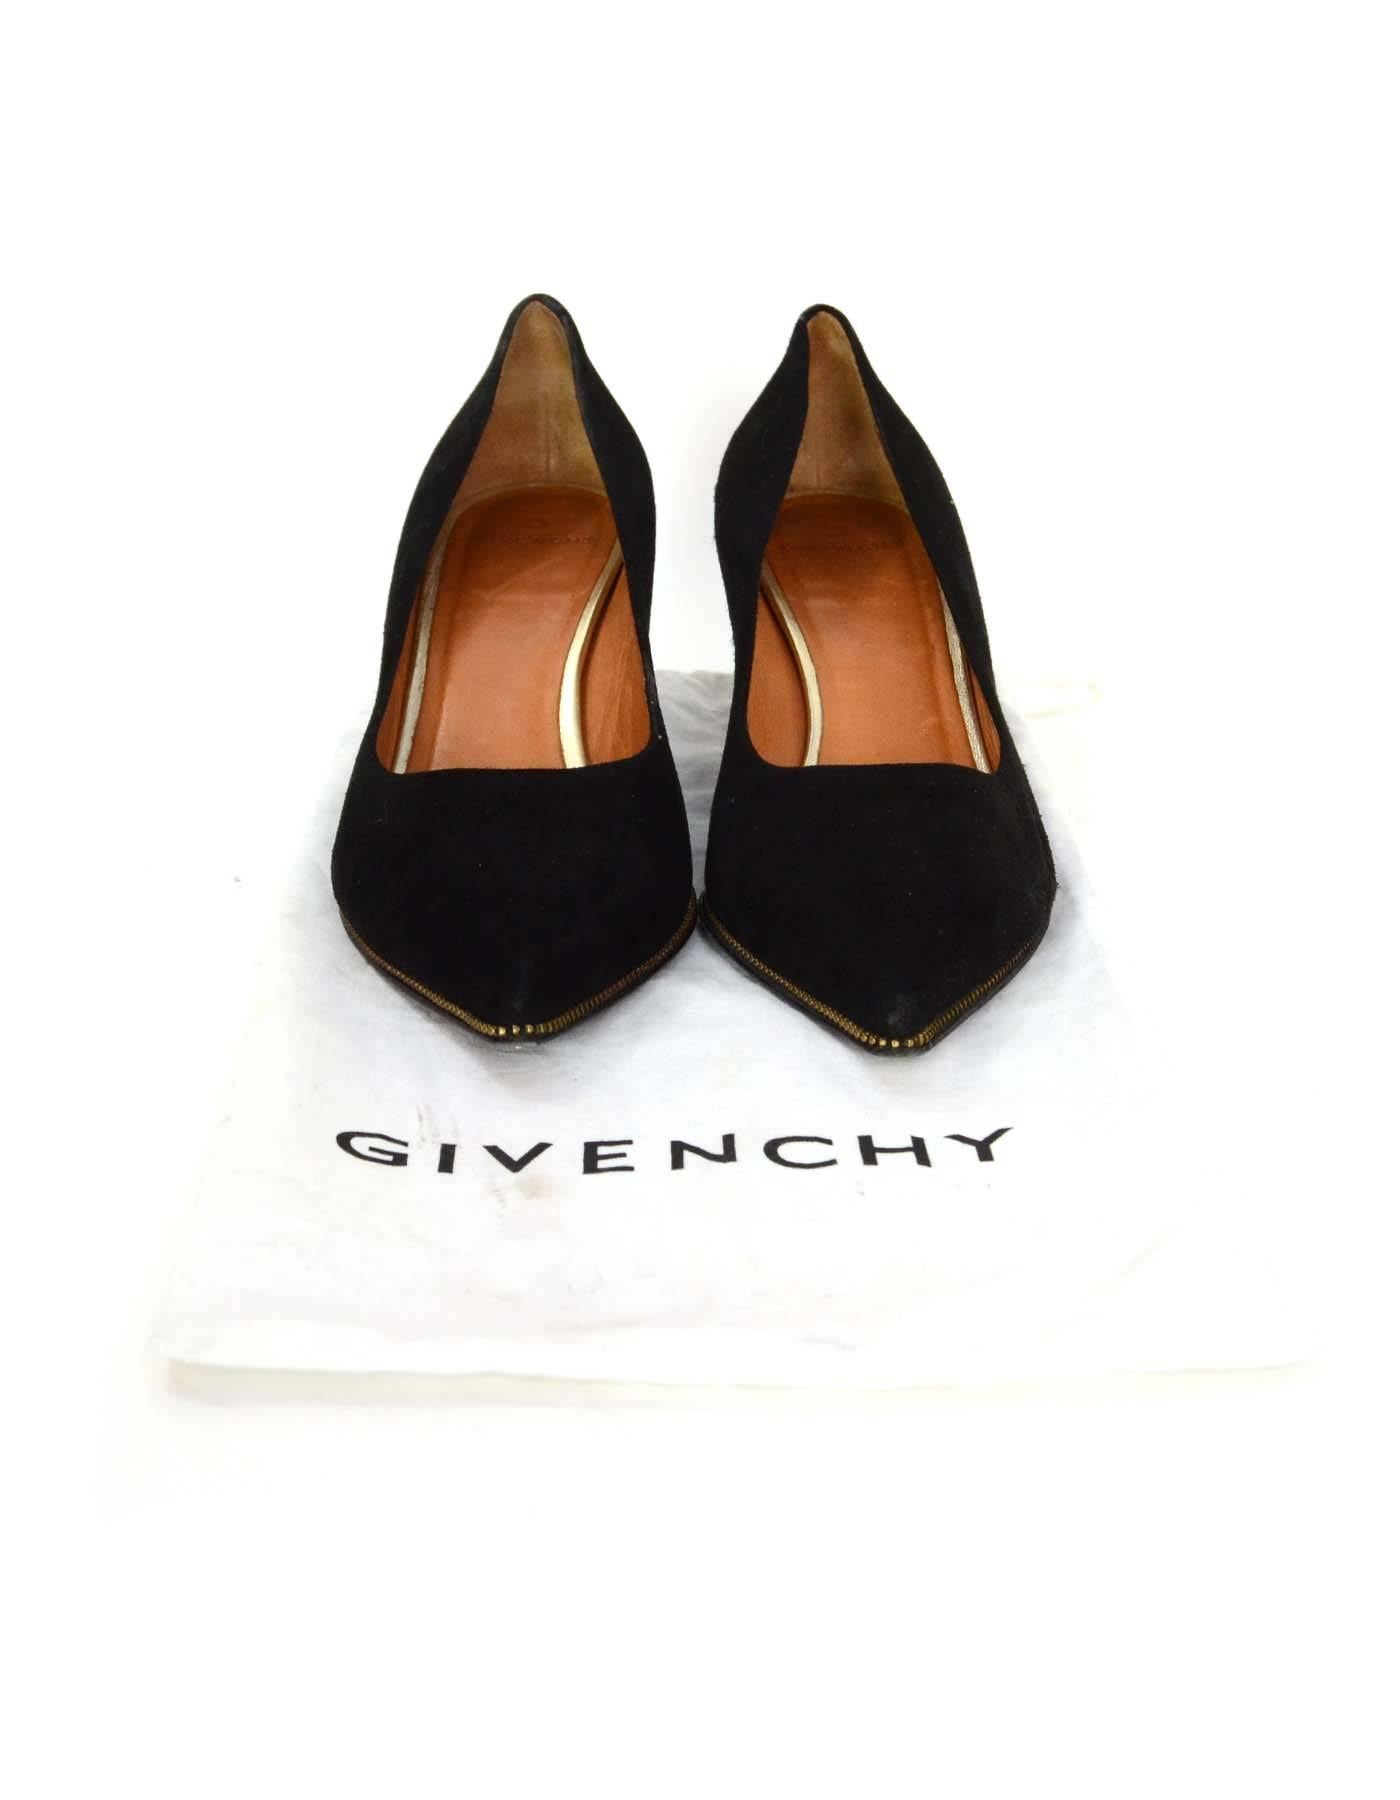 Givenchy Black Suede Kitten Heel Pumps sz 38.5 4